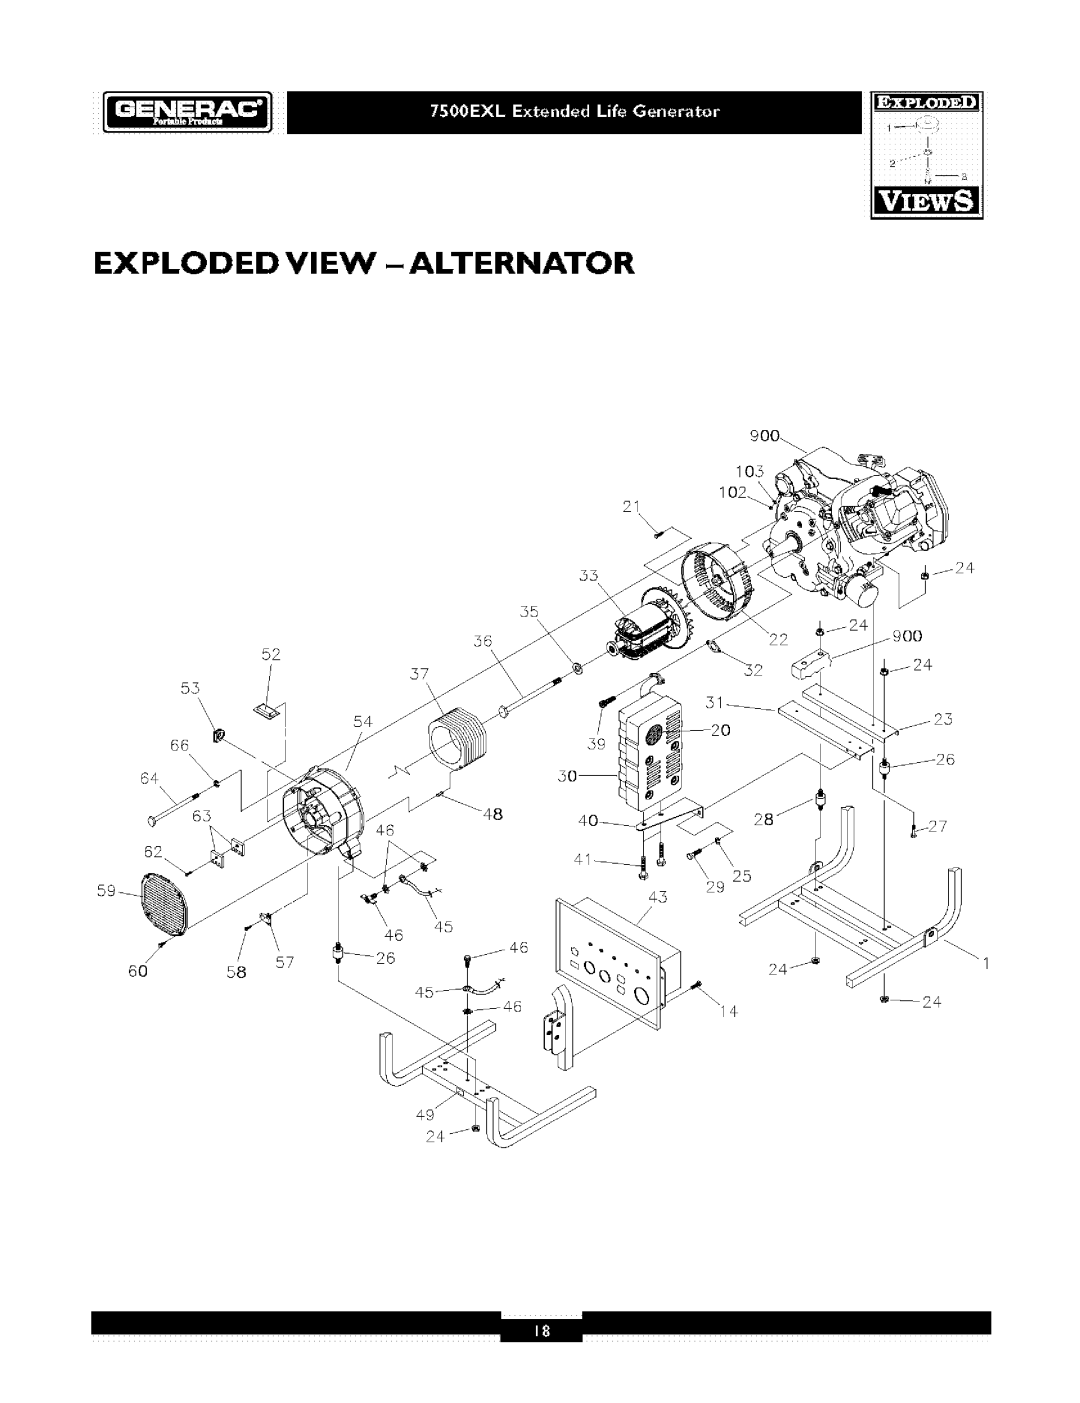 Generac 1019-3 owner manual Exploded View - Alternator, 105, 52 57 